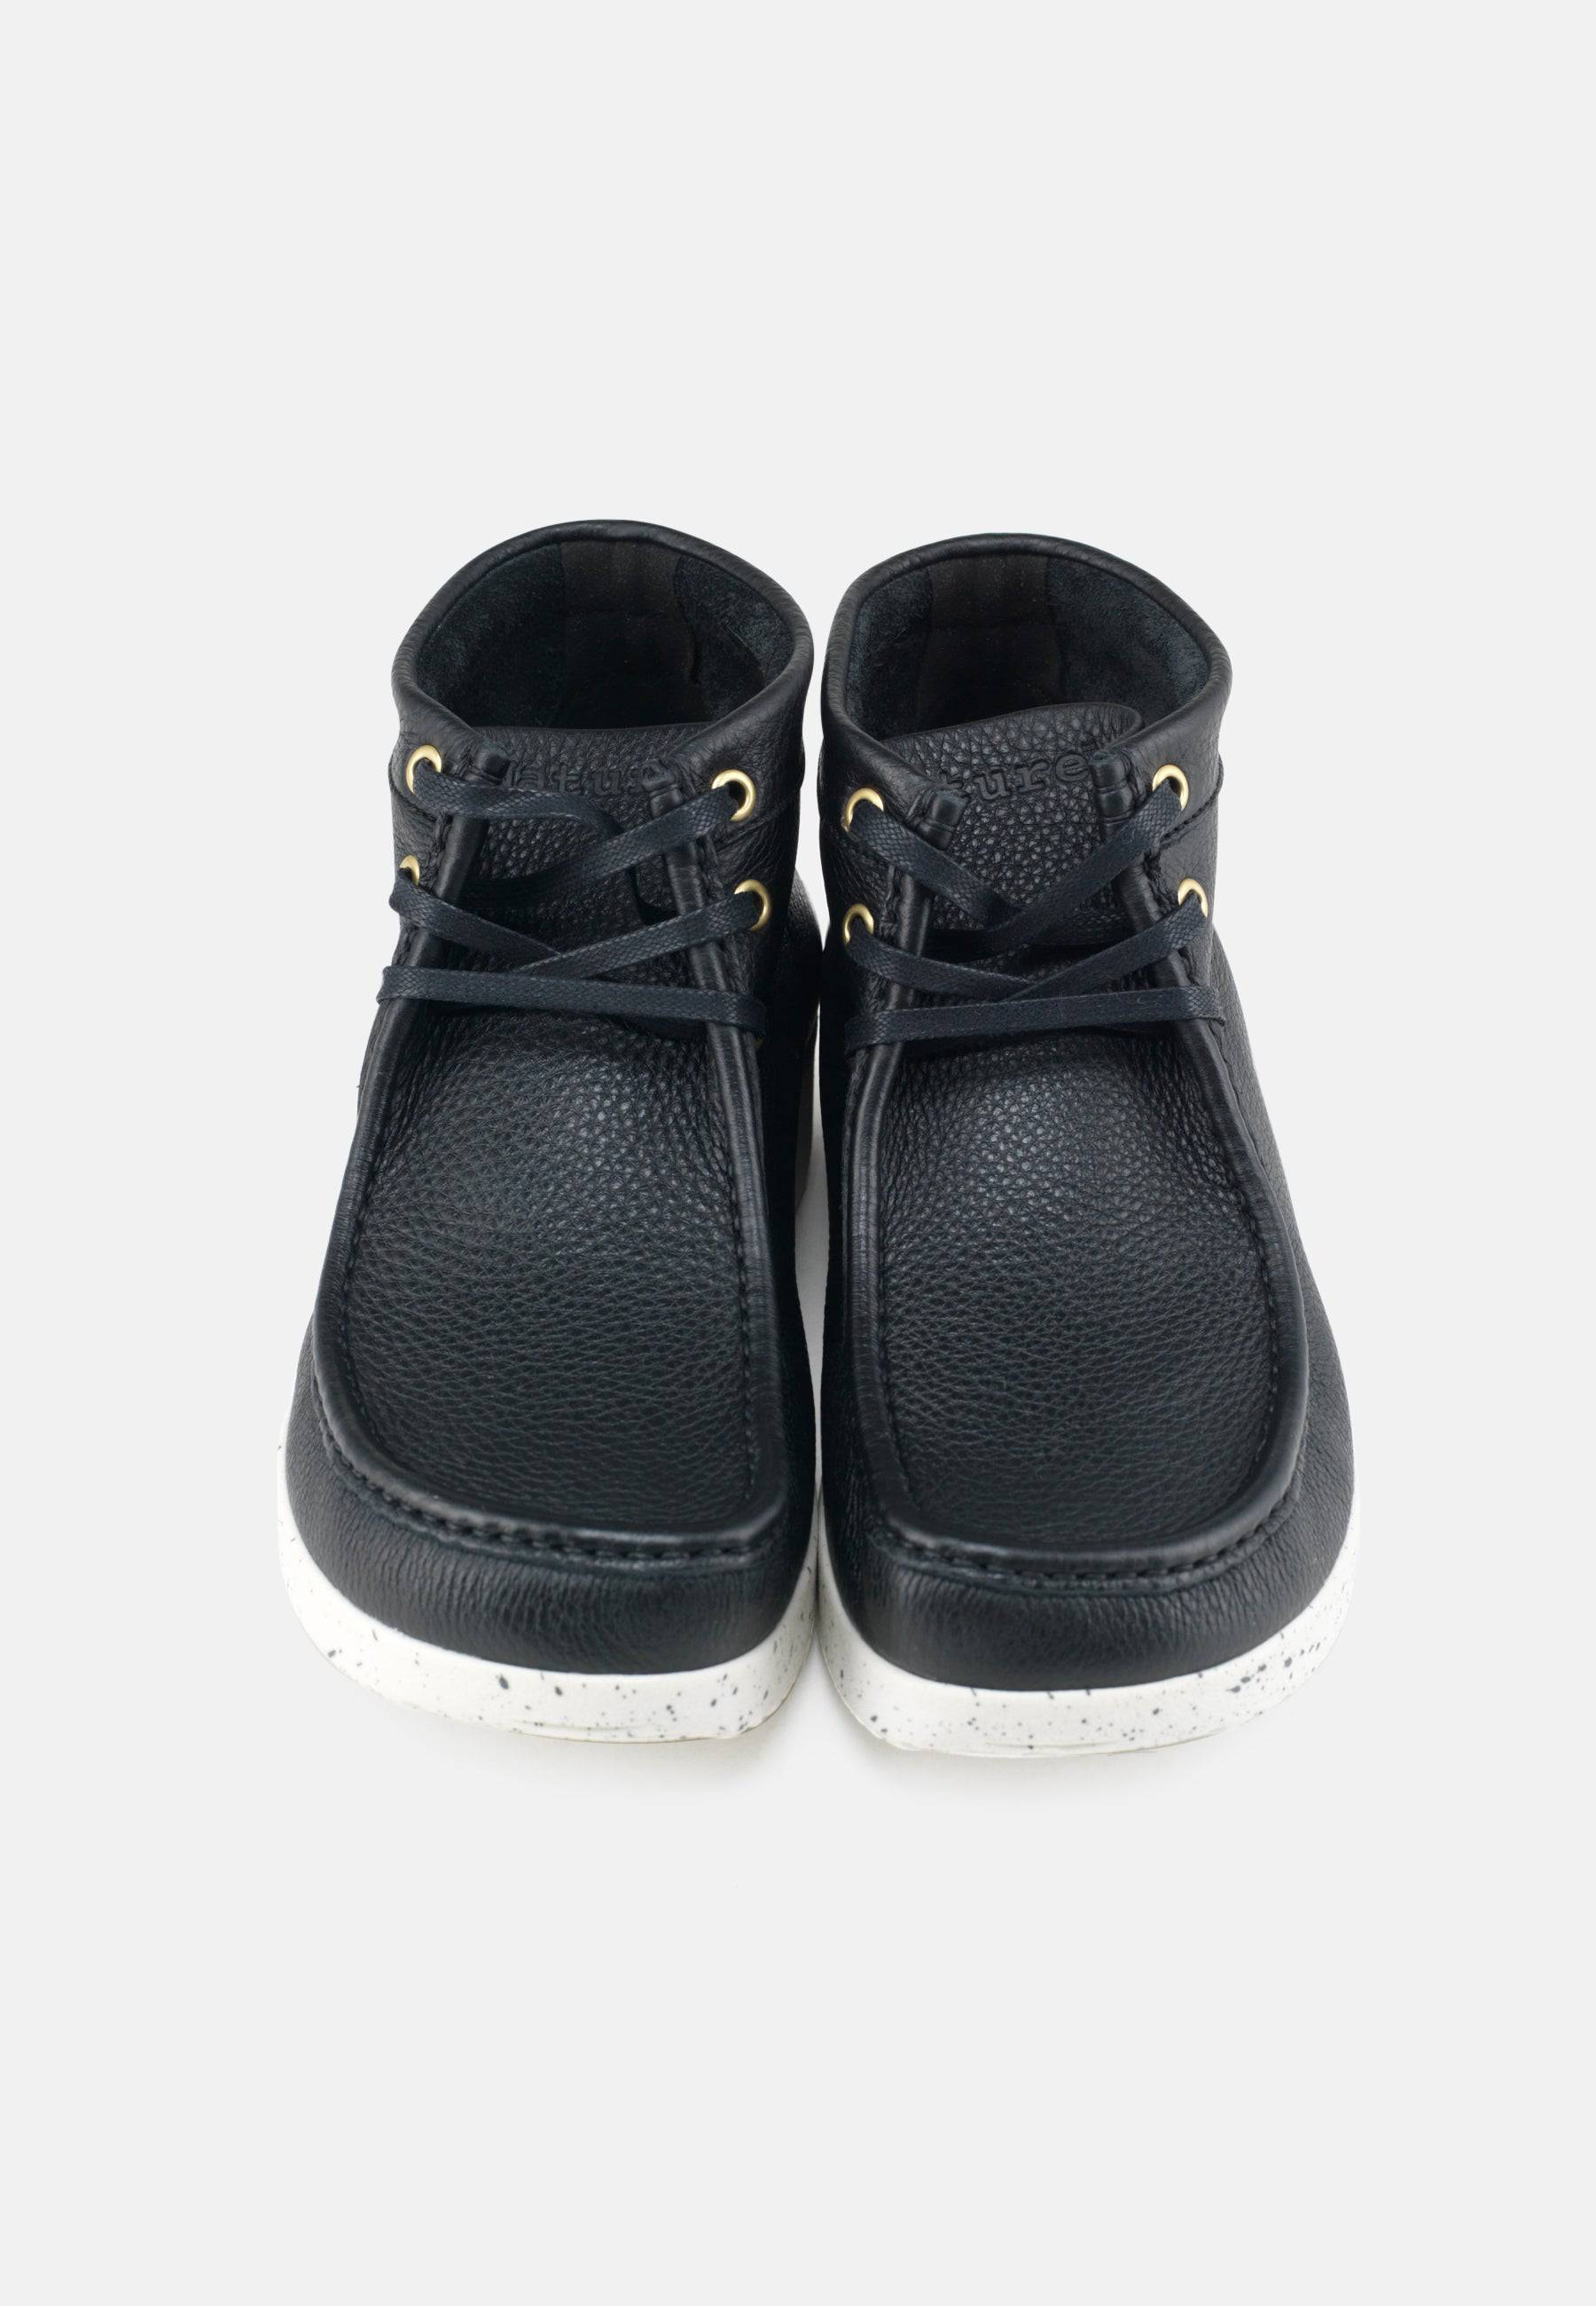 Anton Støvle Leather - Black - Nature Footwear